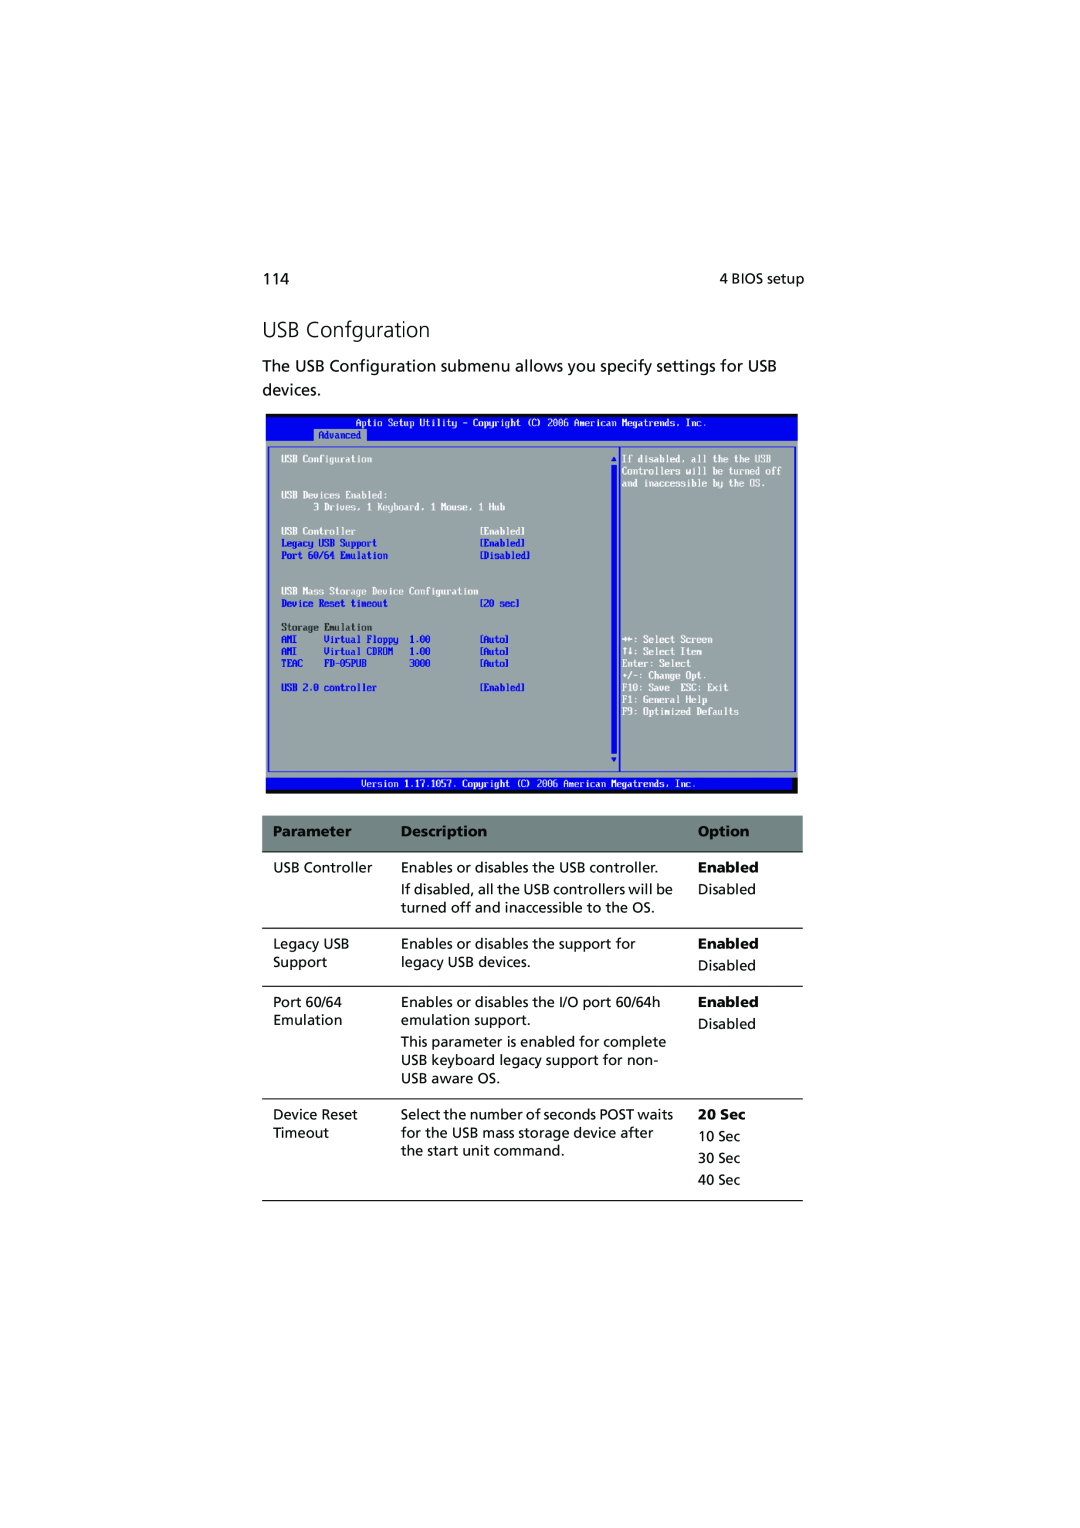 Acer R720 Series manual USB Confguration, Parameter, Description, Option, Enabled, 20 Sec 